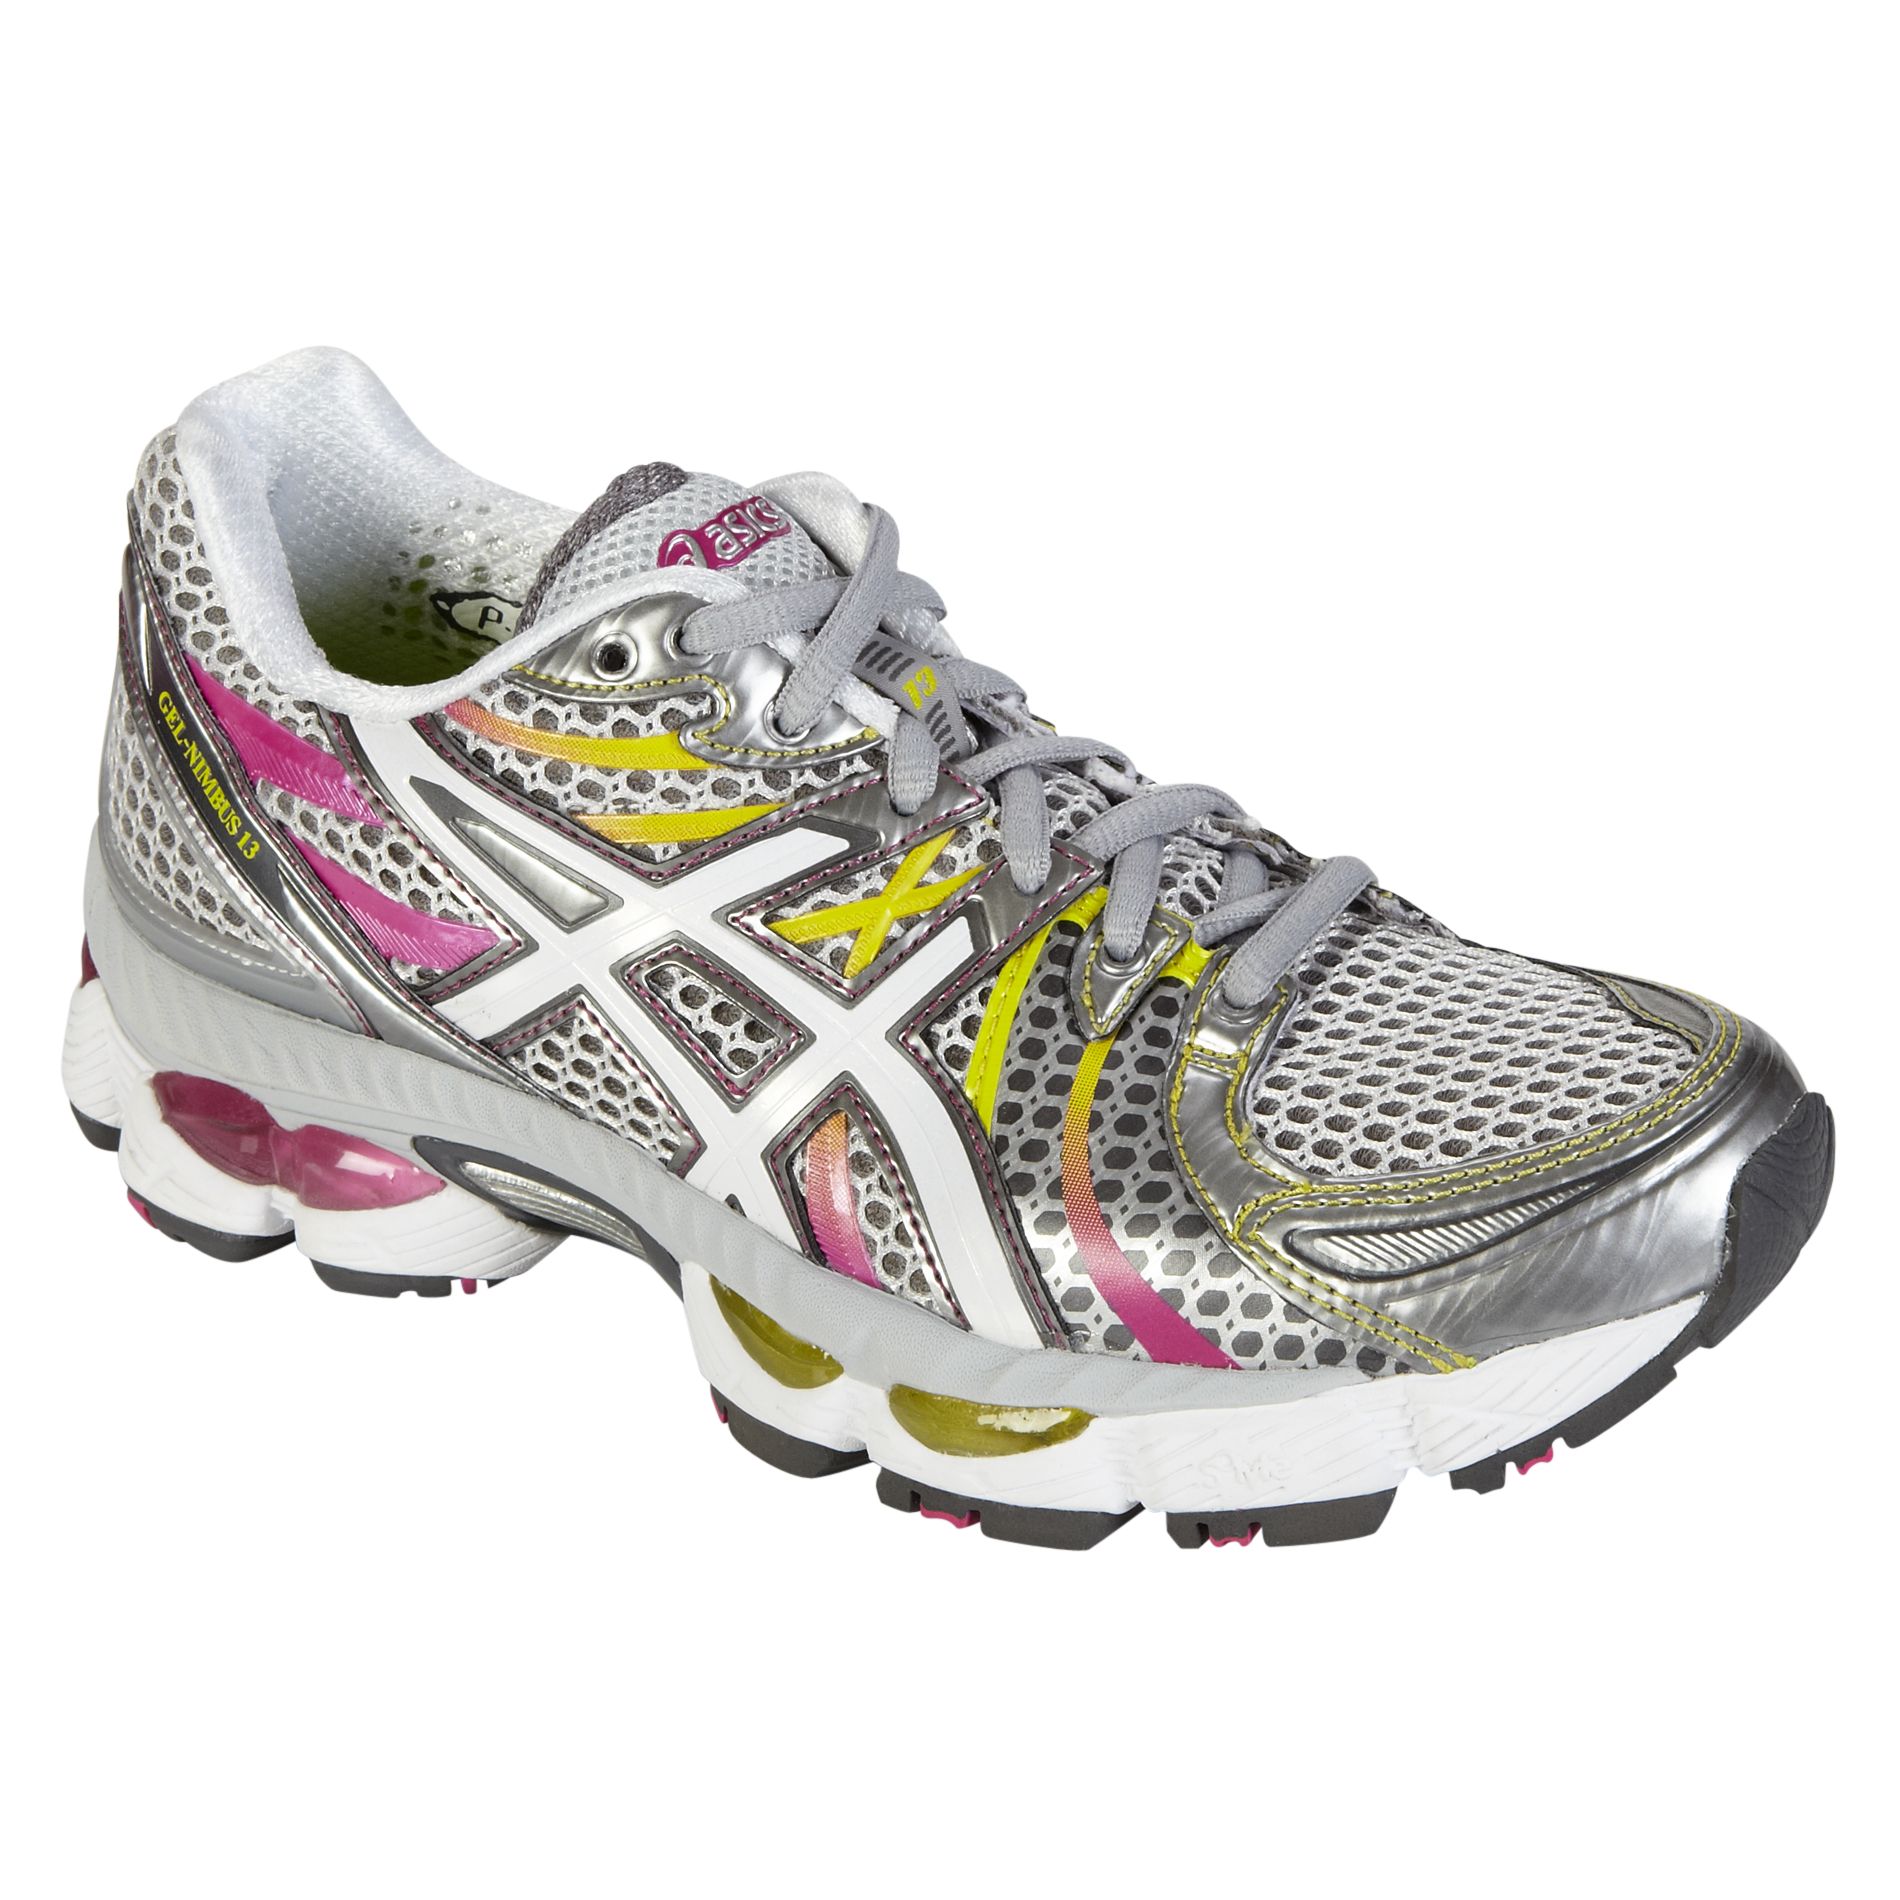 ASICS Women's GEL-Nimbus 13 Running Athletic Shoe Wide Width - Silver/Pink/Yellow